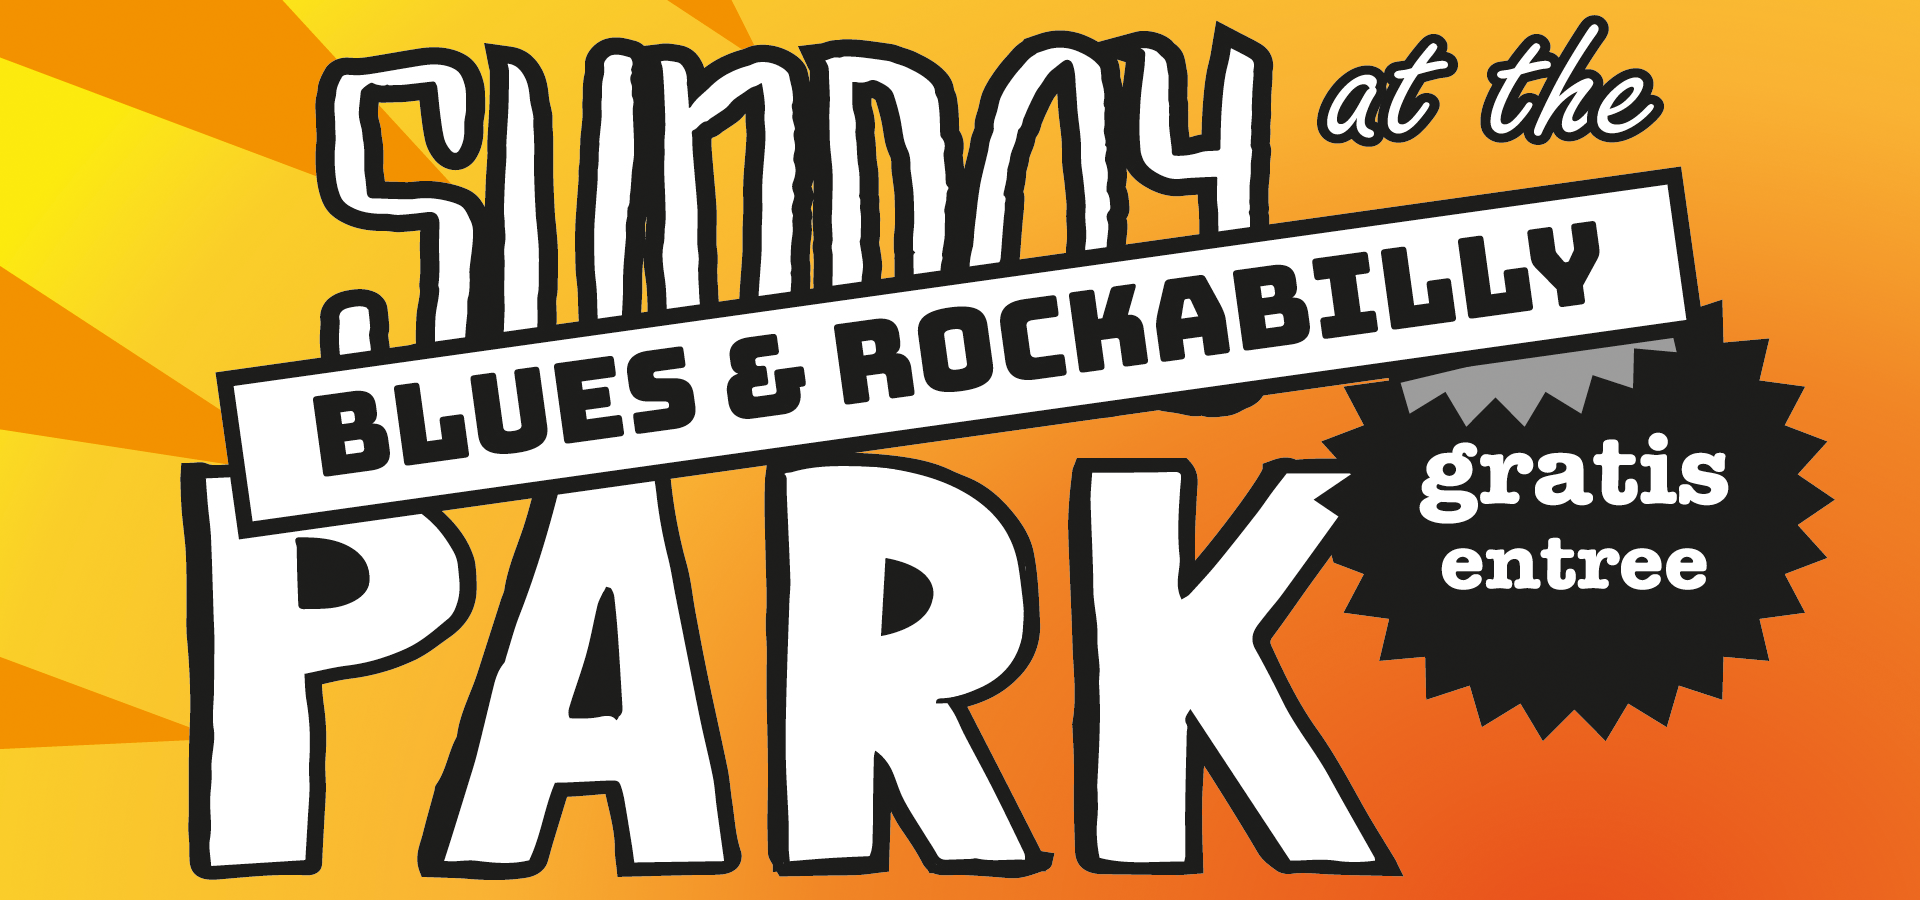 Sunday at the Park - Blues & Rockabilly